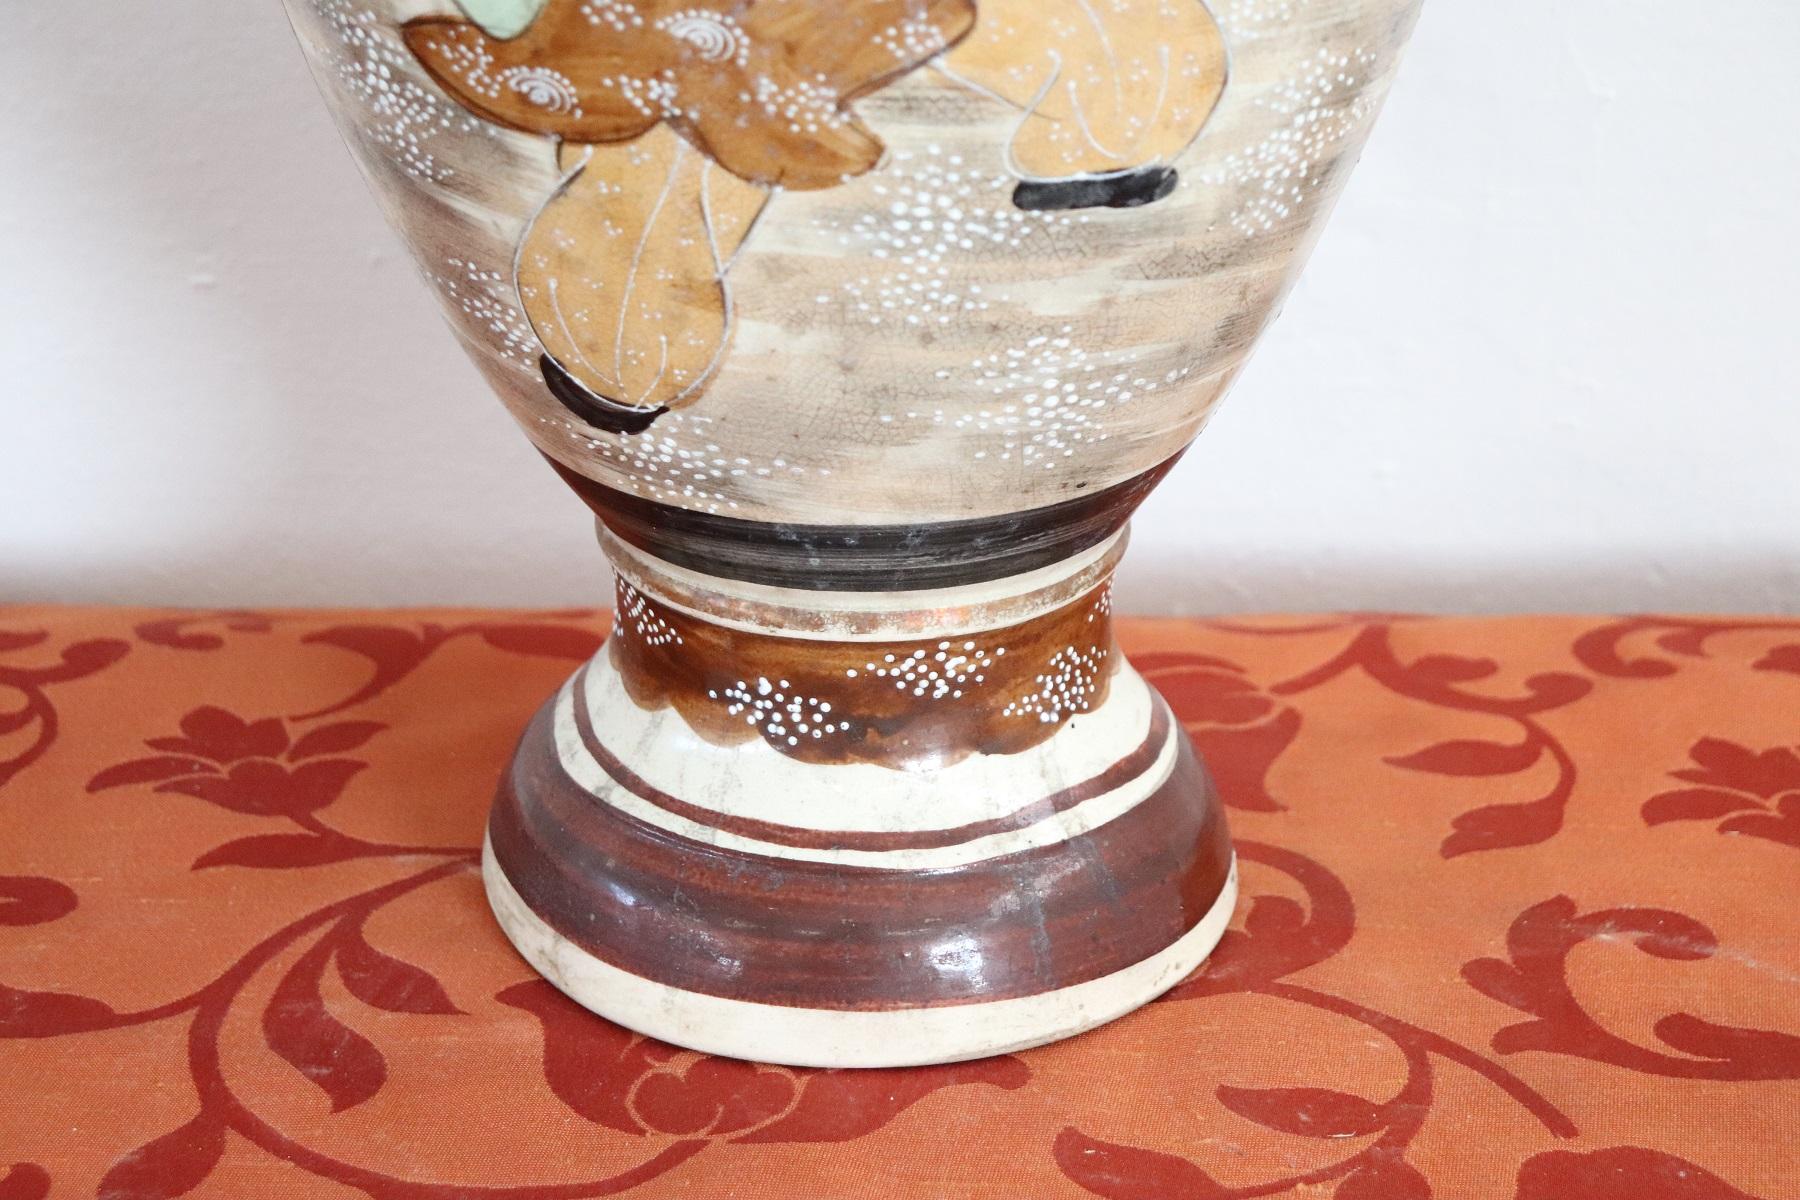 20th Century Japanese Vintage Artistic Satsuma Vase in Decorated Ceramic In Good Condition For Sale In Casale Monferrato, IT